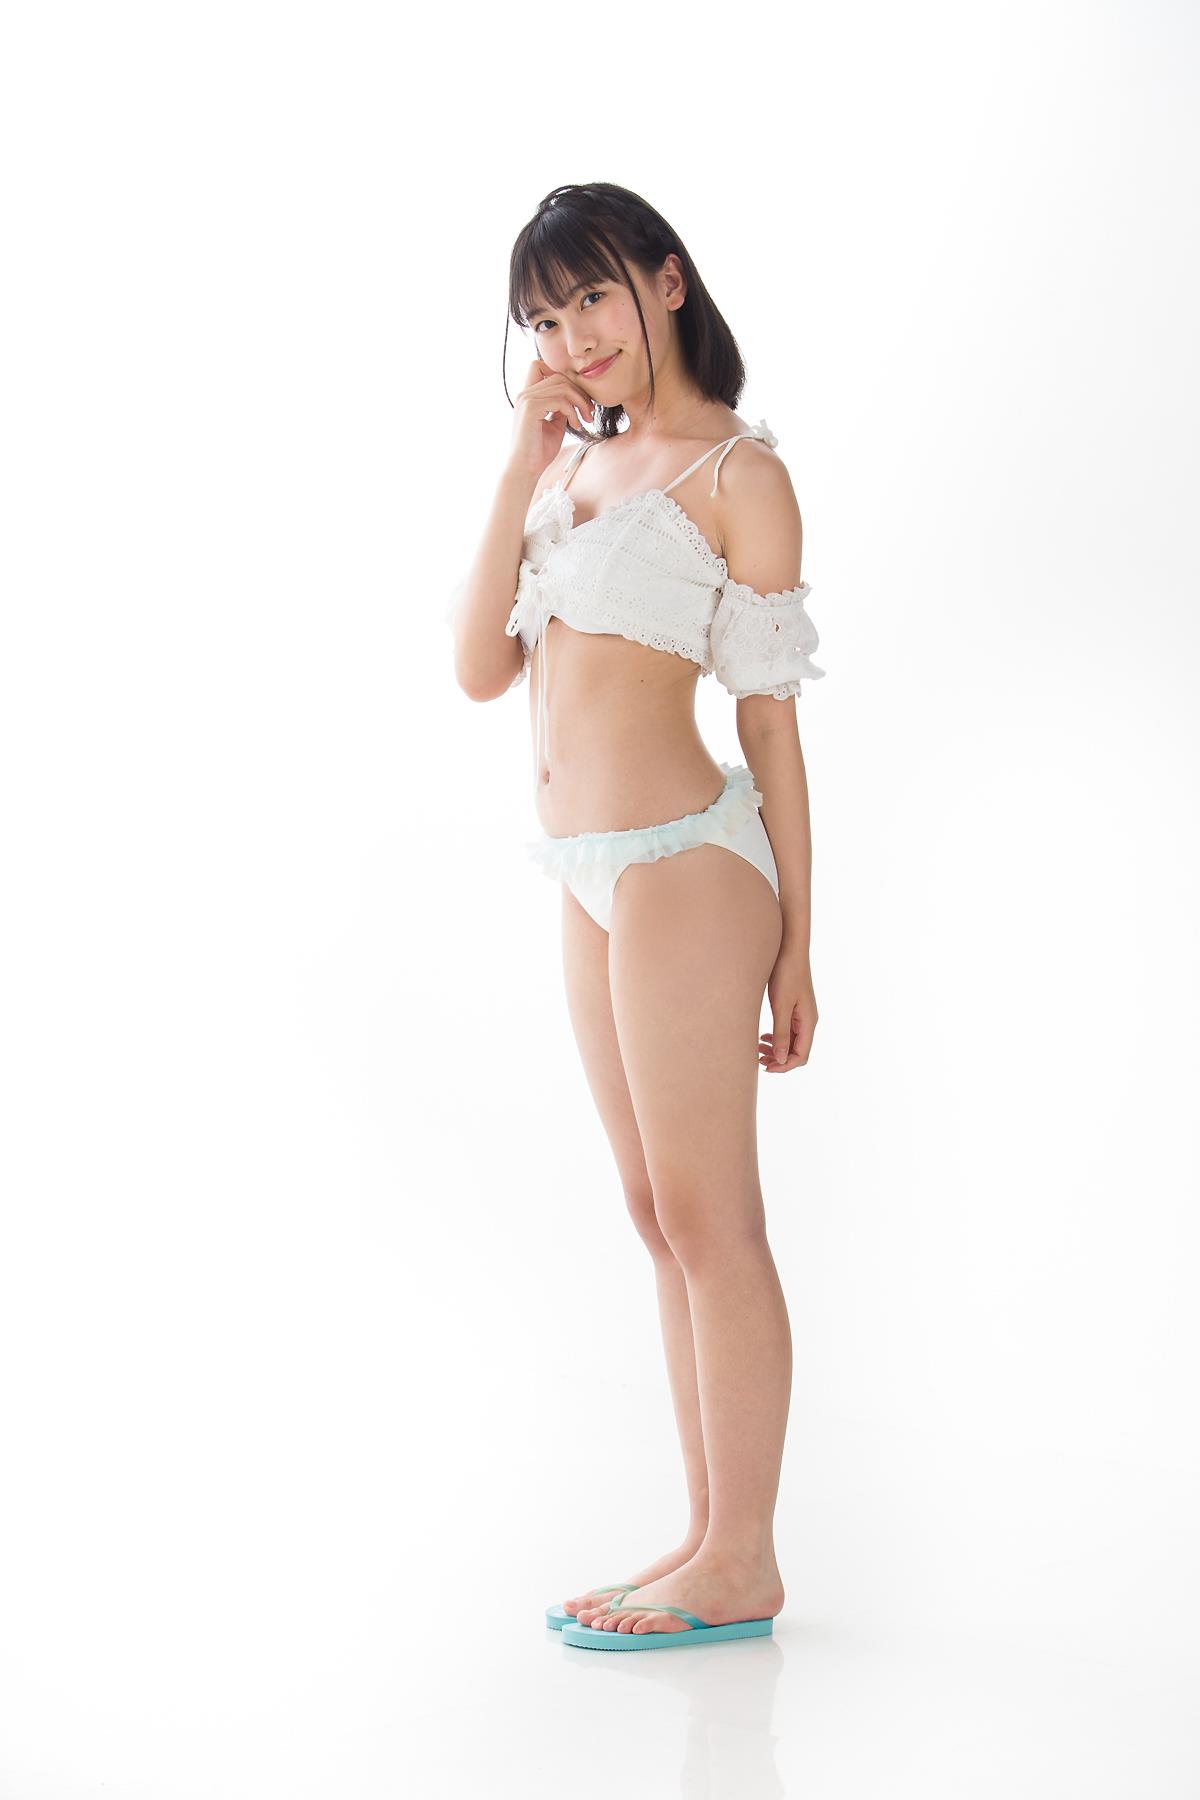 Minisuka.tv Sarina Kashiwagi 柏木さりな Premium Gallery 2.6 - 12.jpg